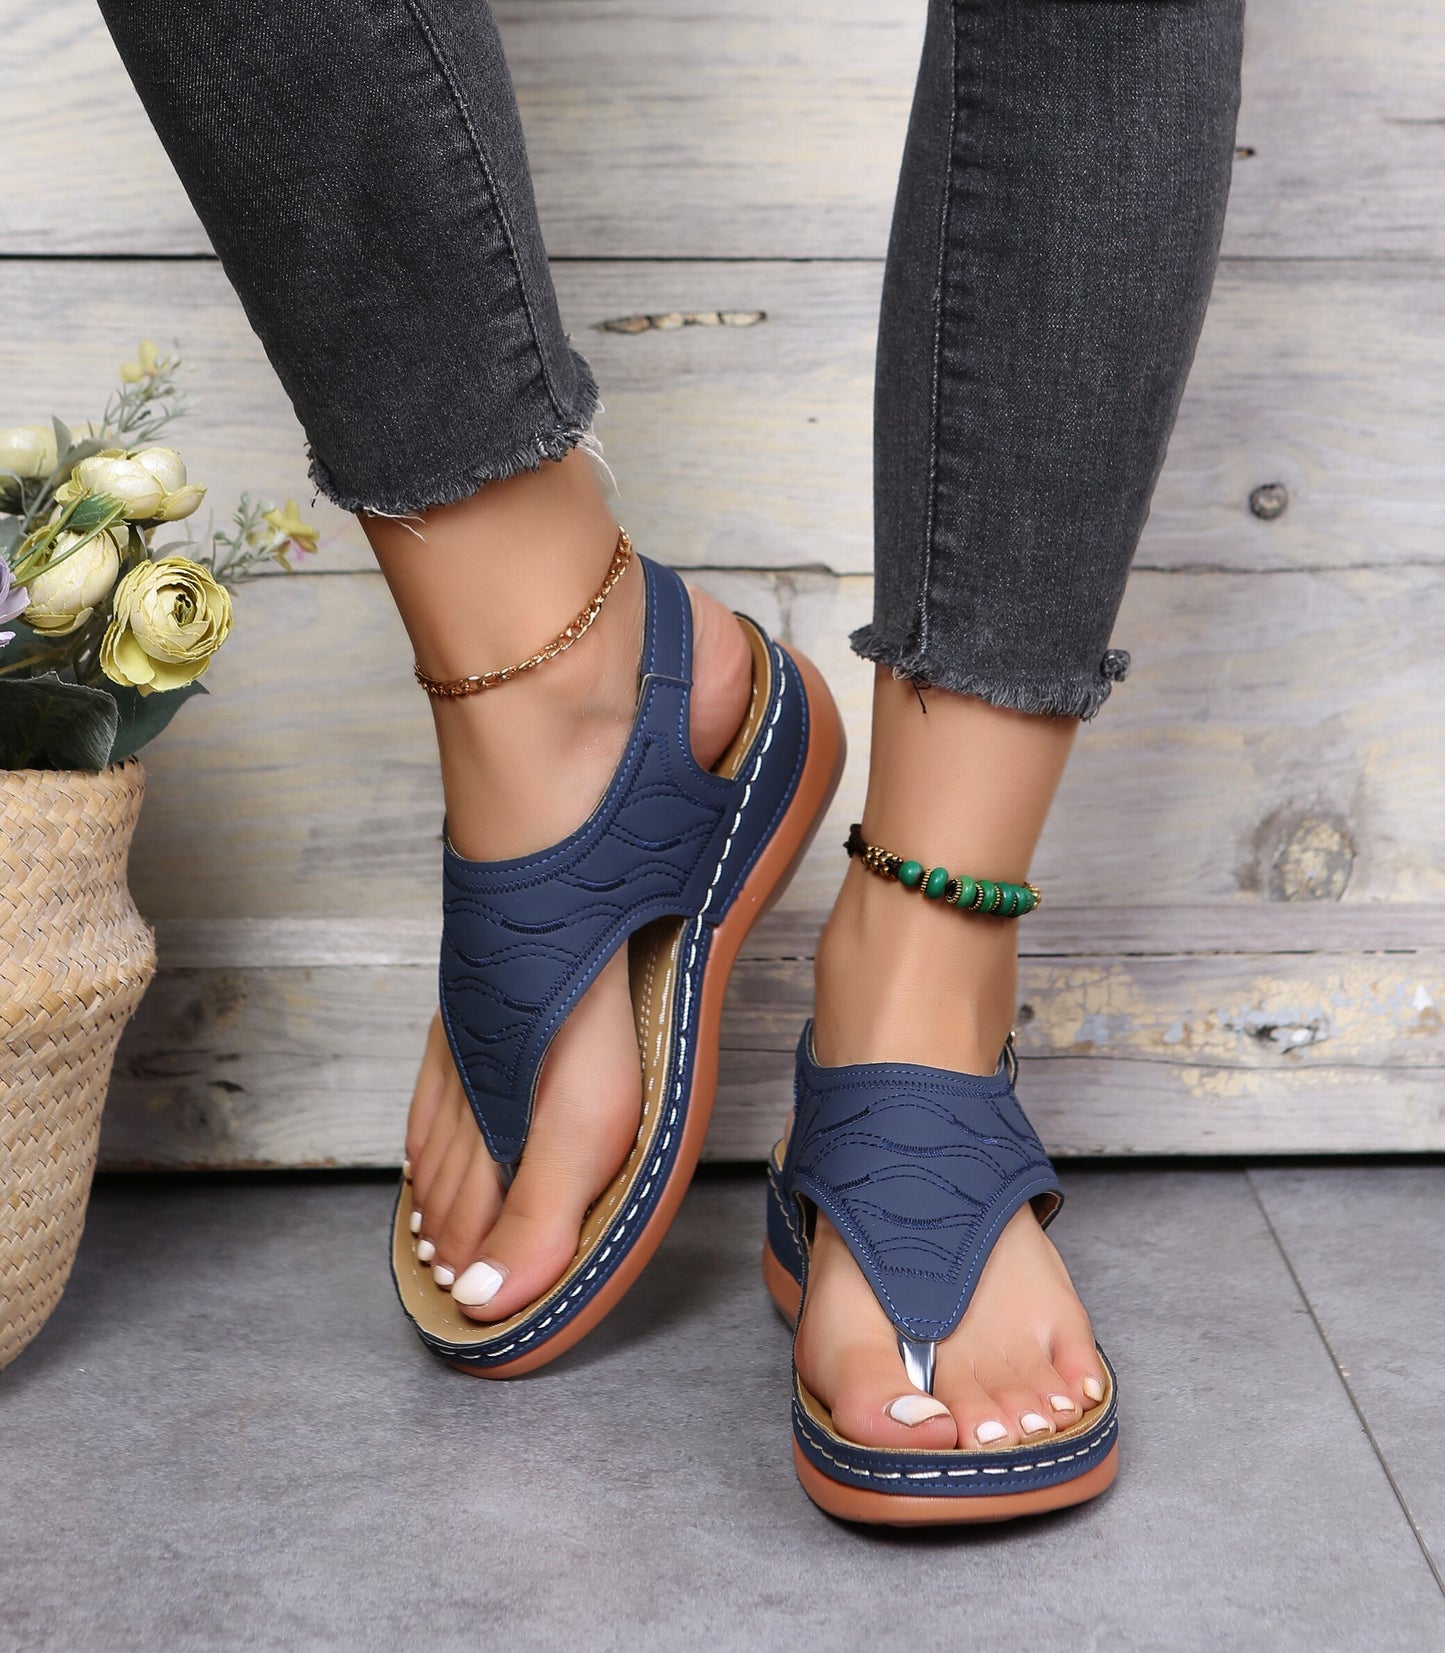 Summer Oxford Women Sandals Flats Slippers Pu Leather Flip Flops Belt Buckle Rome Fashion